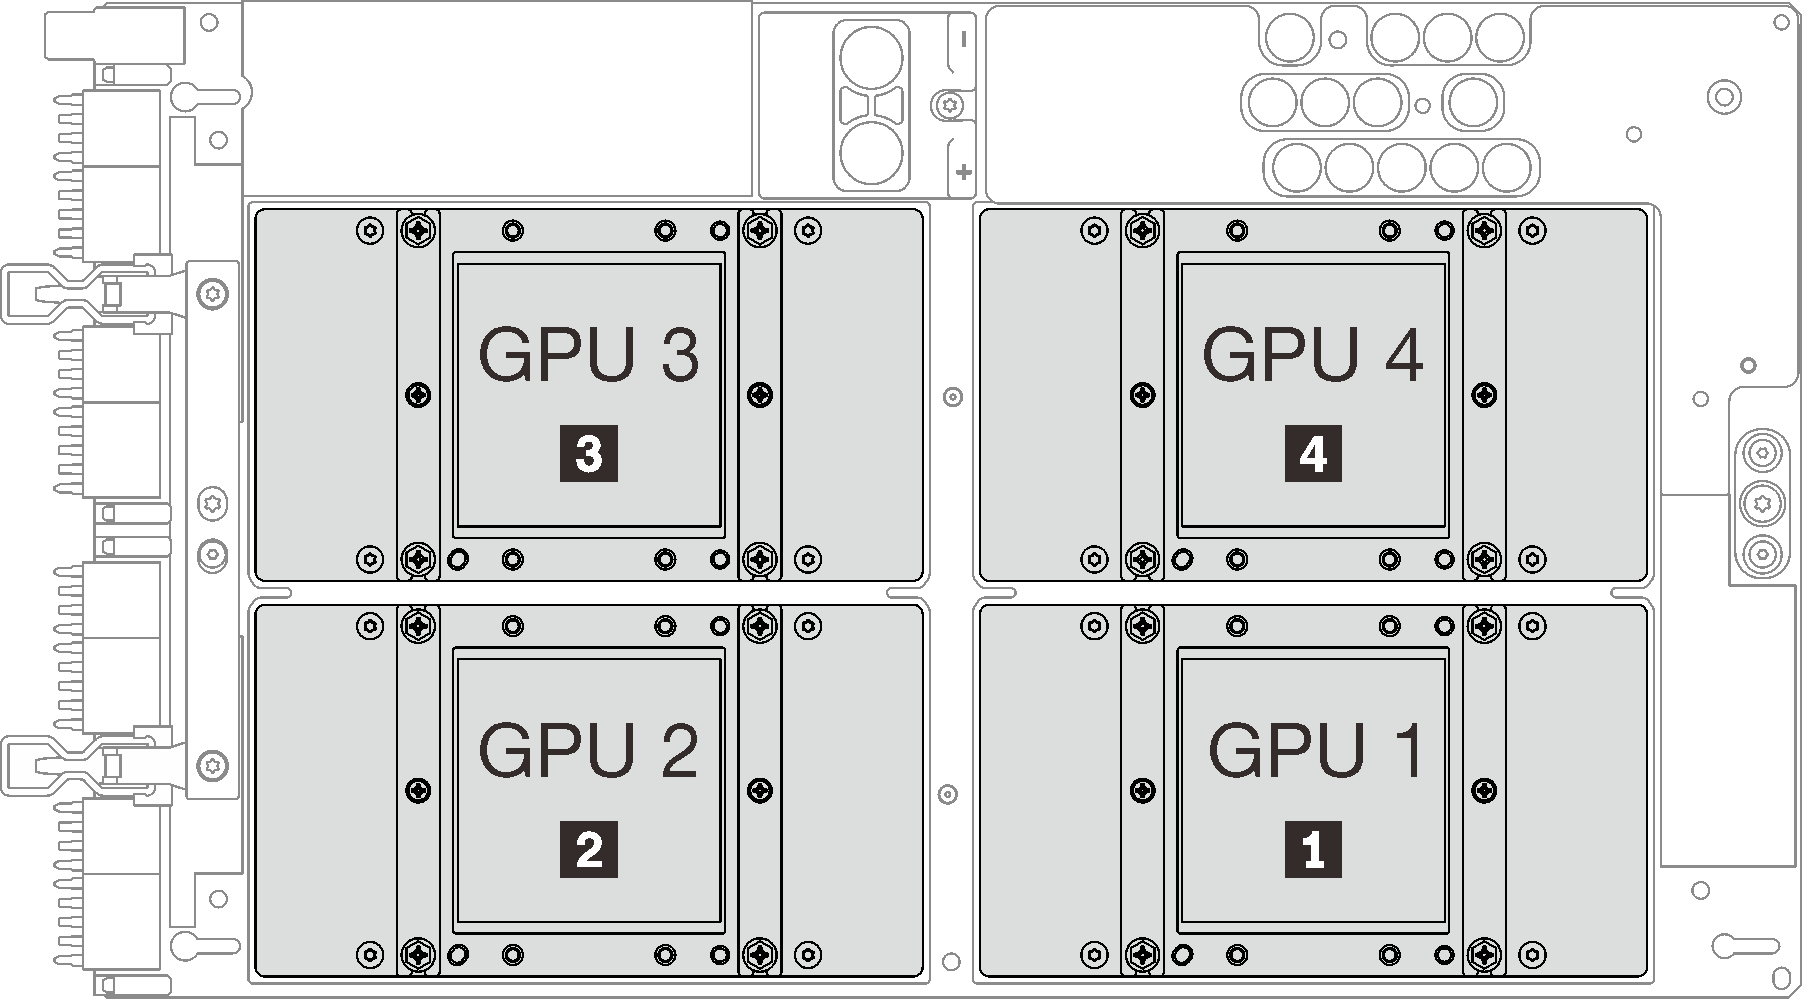 GPU numbering - SD650-N V2 tray